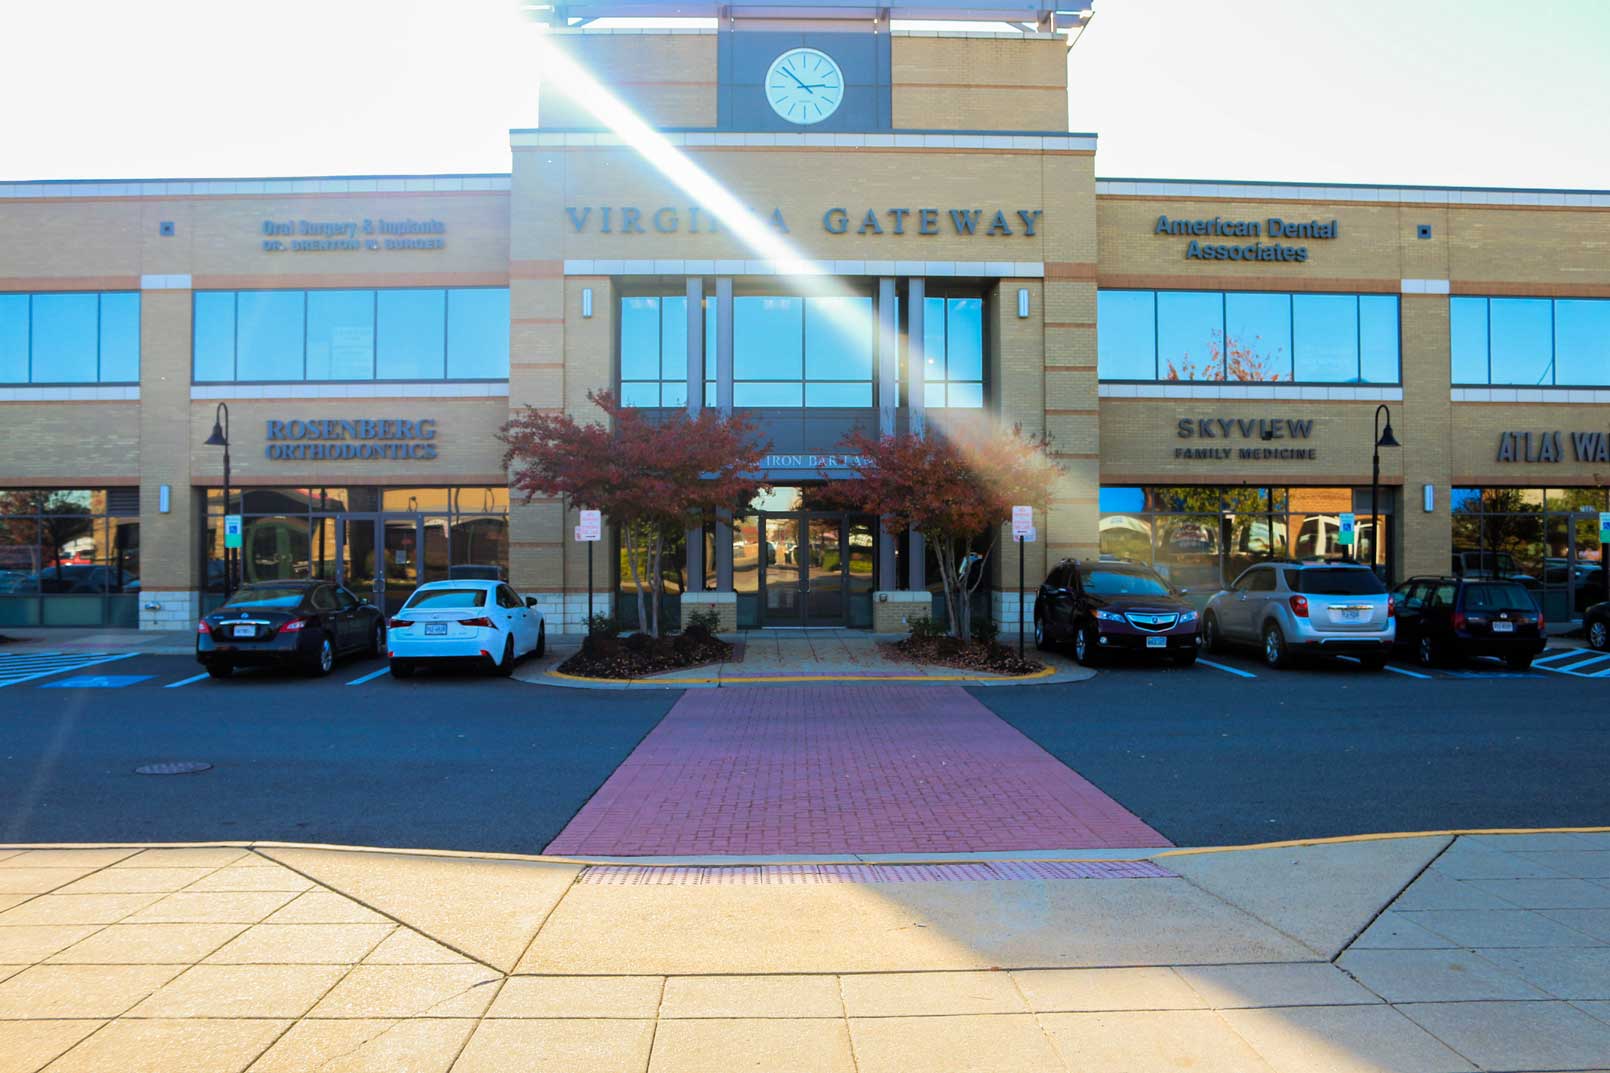 Virginia Gateway in Gainesville, VA